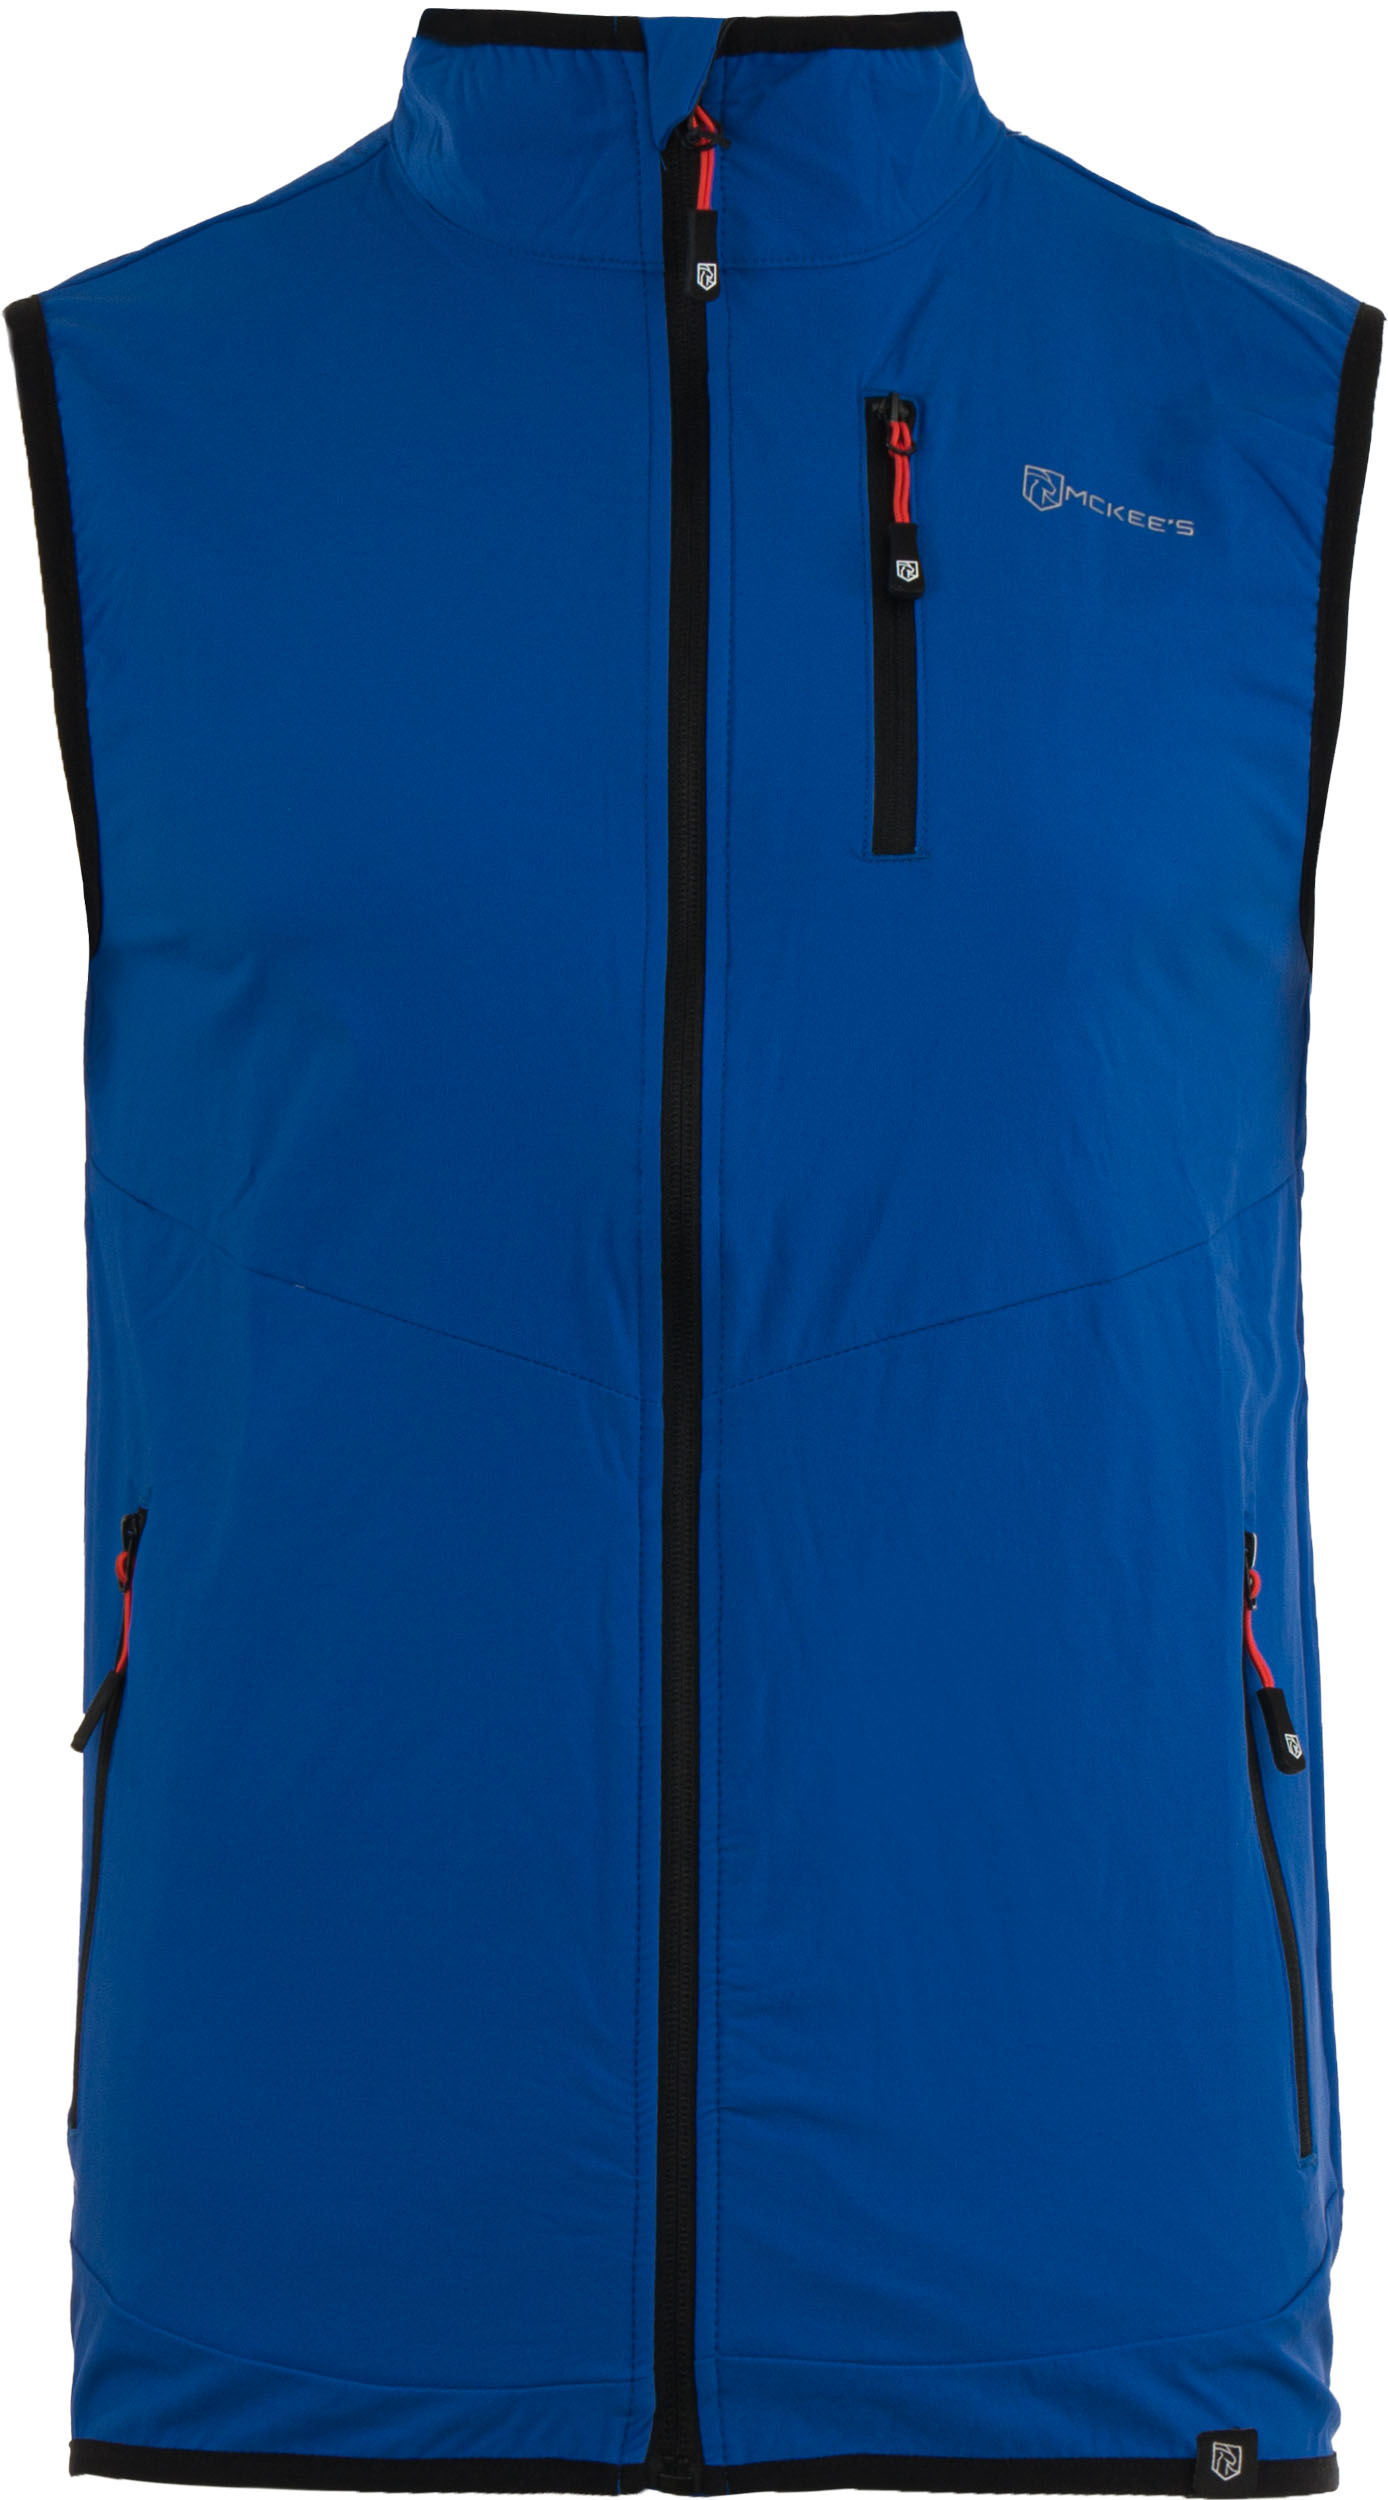 Pánská vesta Mckees Callangate royal blue|XL